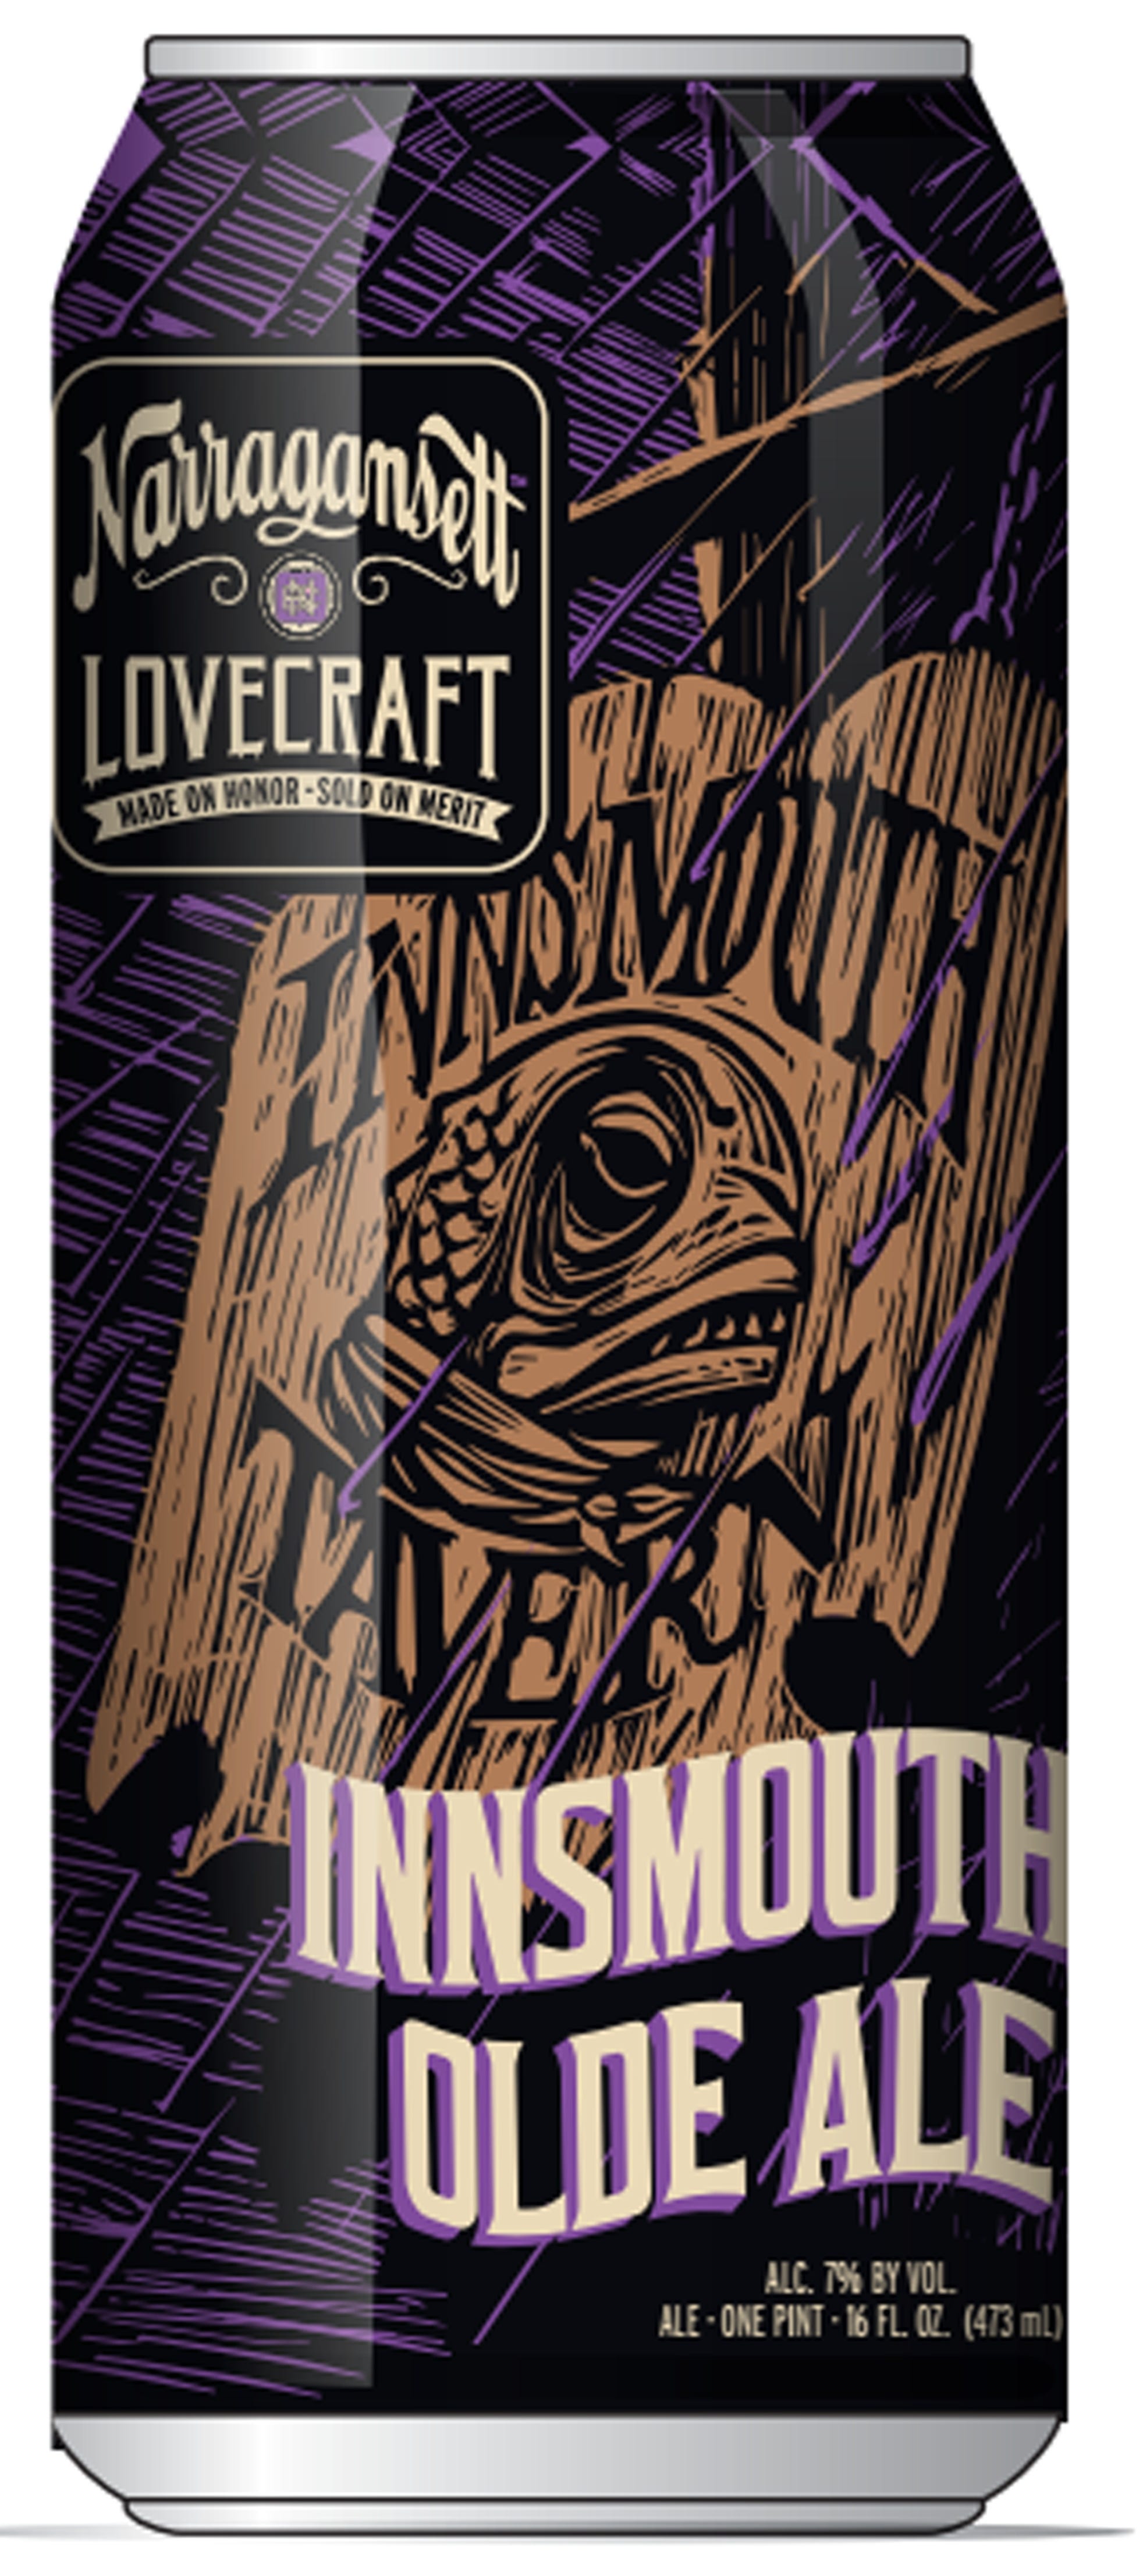 Lovecraft Innsmouth Olde Ale Poster Sign Rhode Island P Narragansett Beer H 